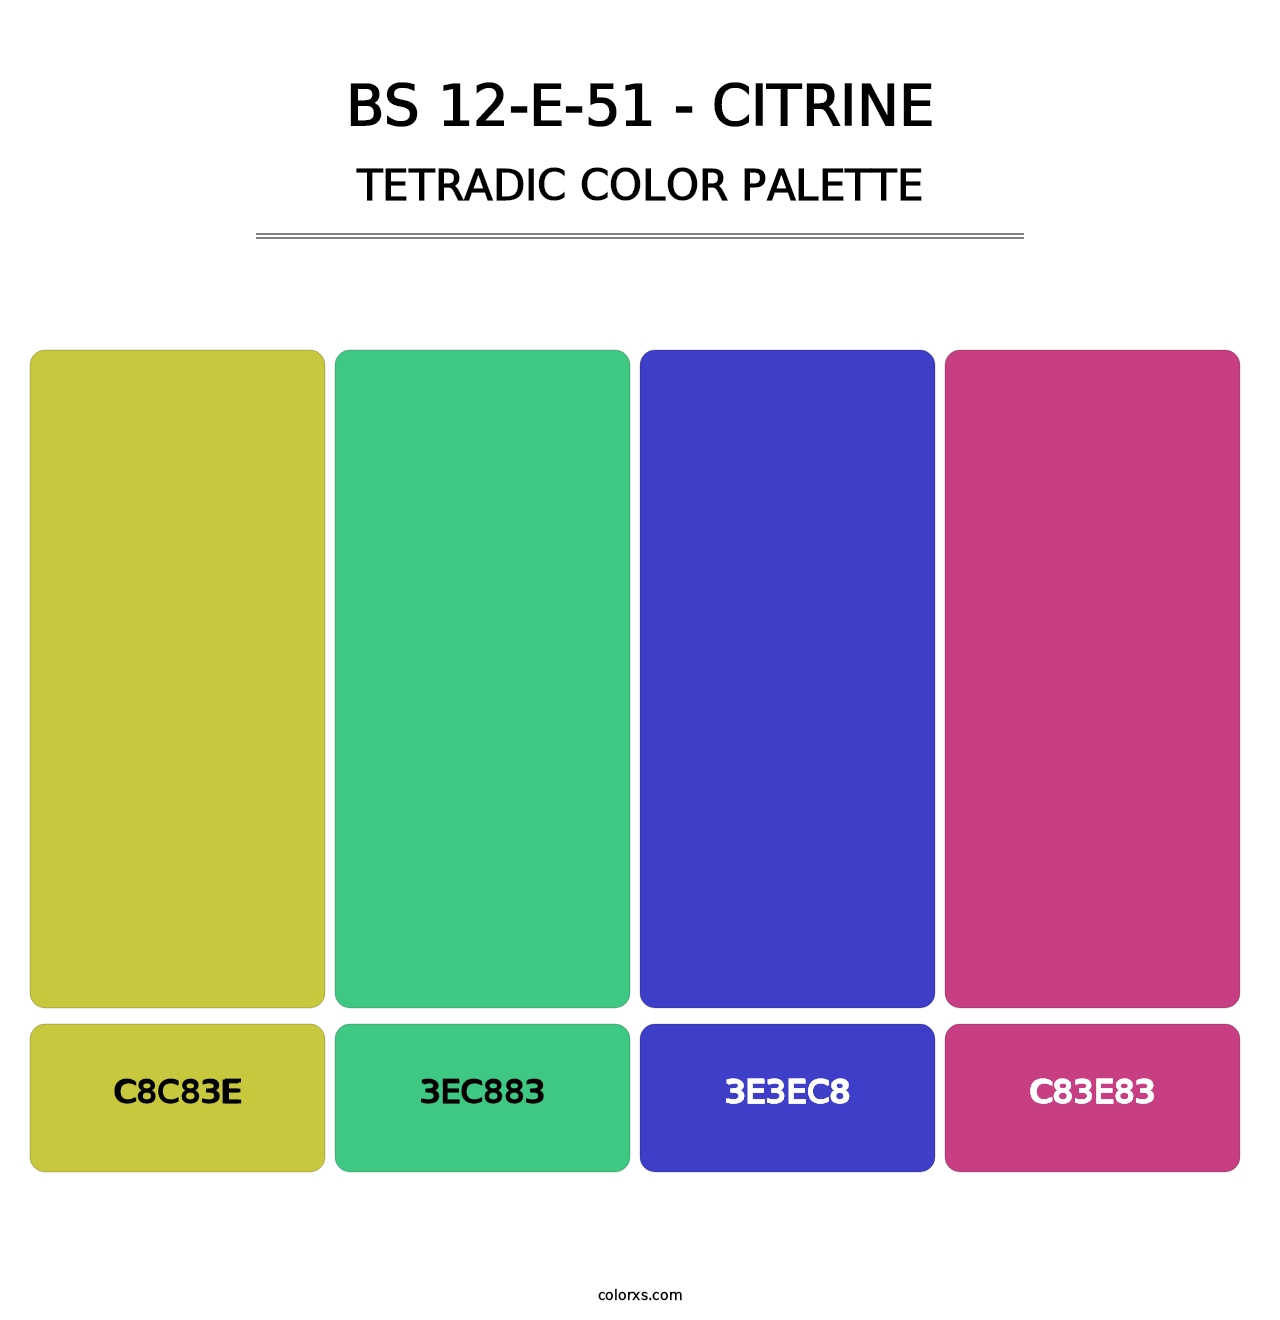 BS 12-E-51 - Citrine - Tetradic Color Palette